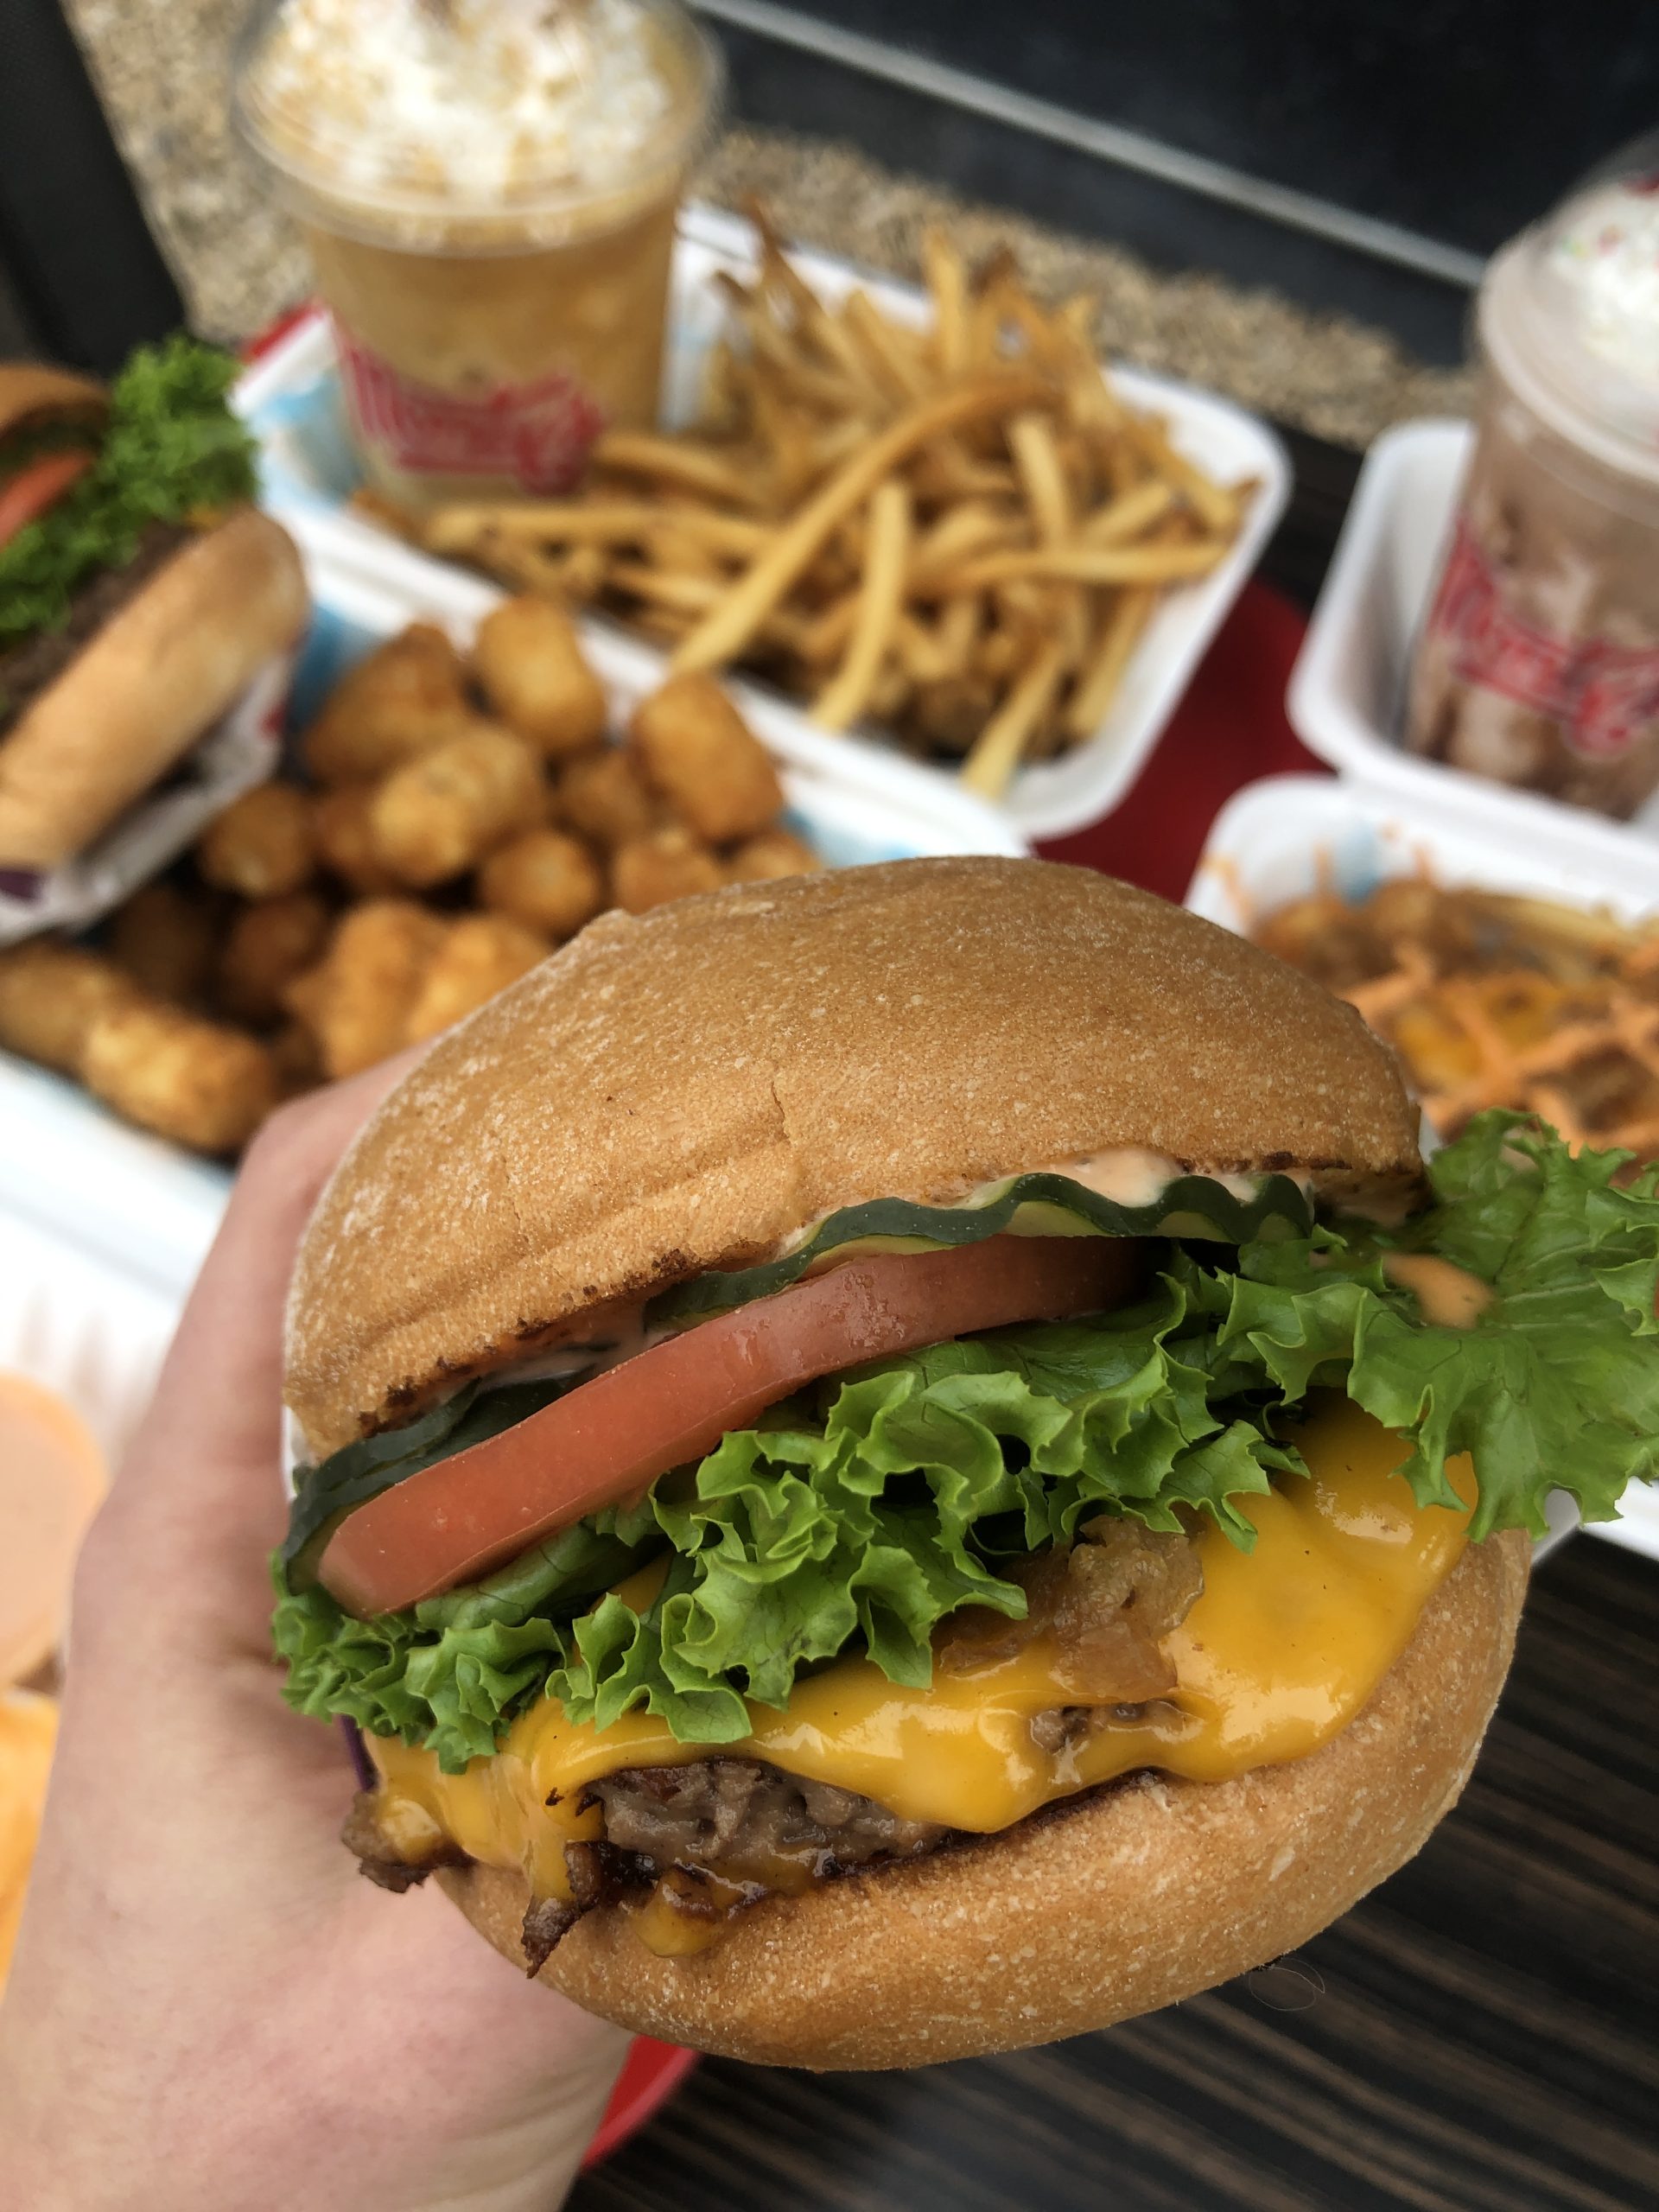 Vegan Double Cheeseburger from Monty's Good Burger